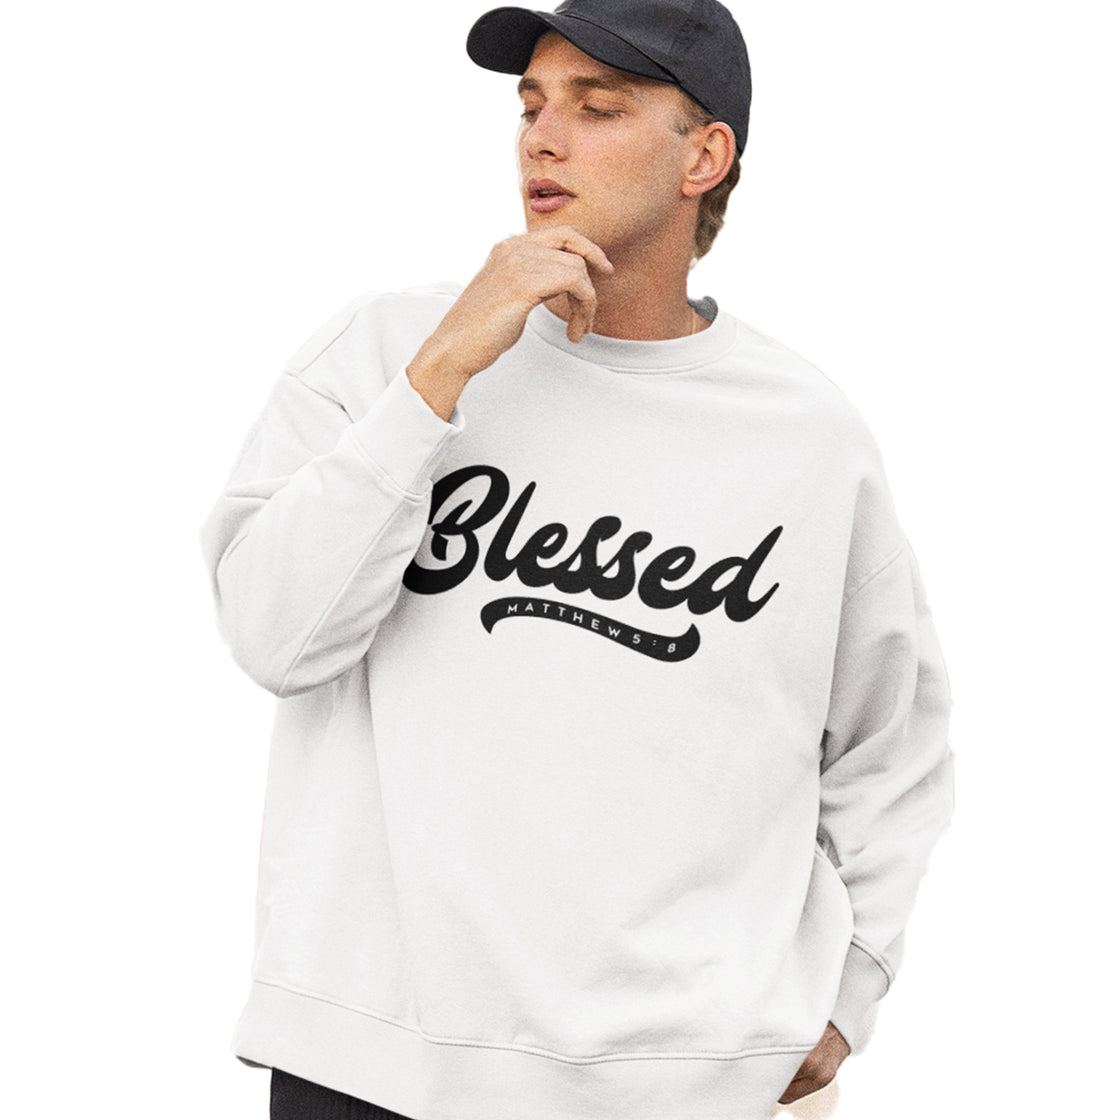 Blessed - Sweatshirts